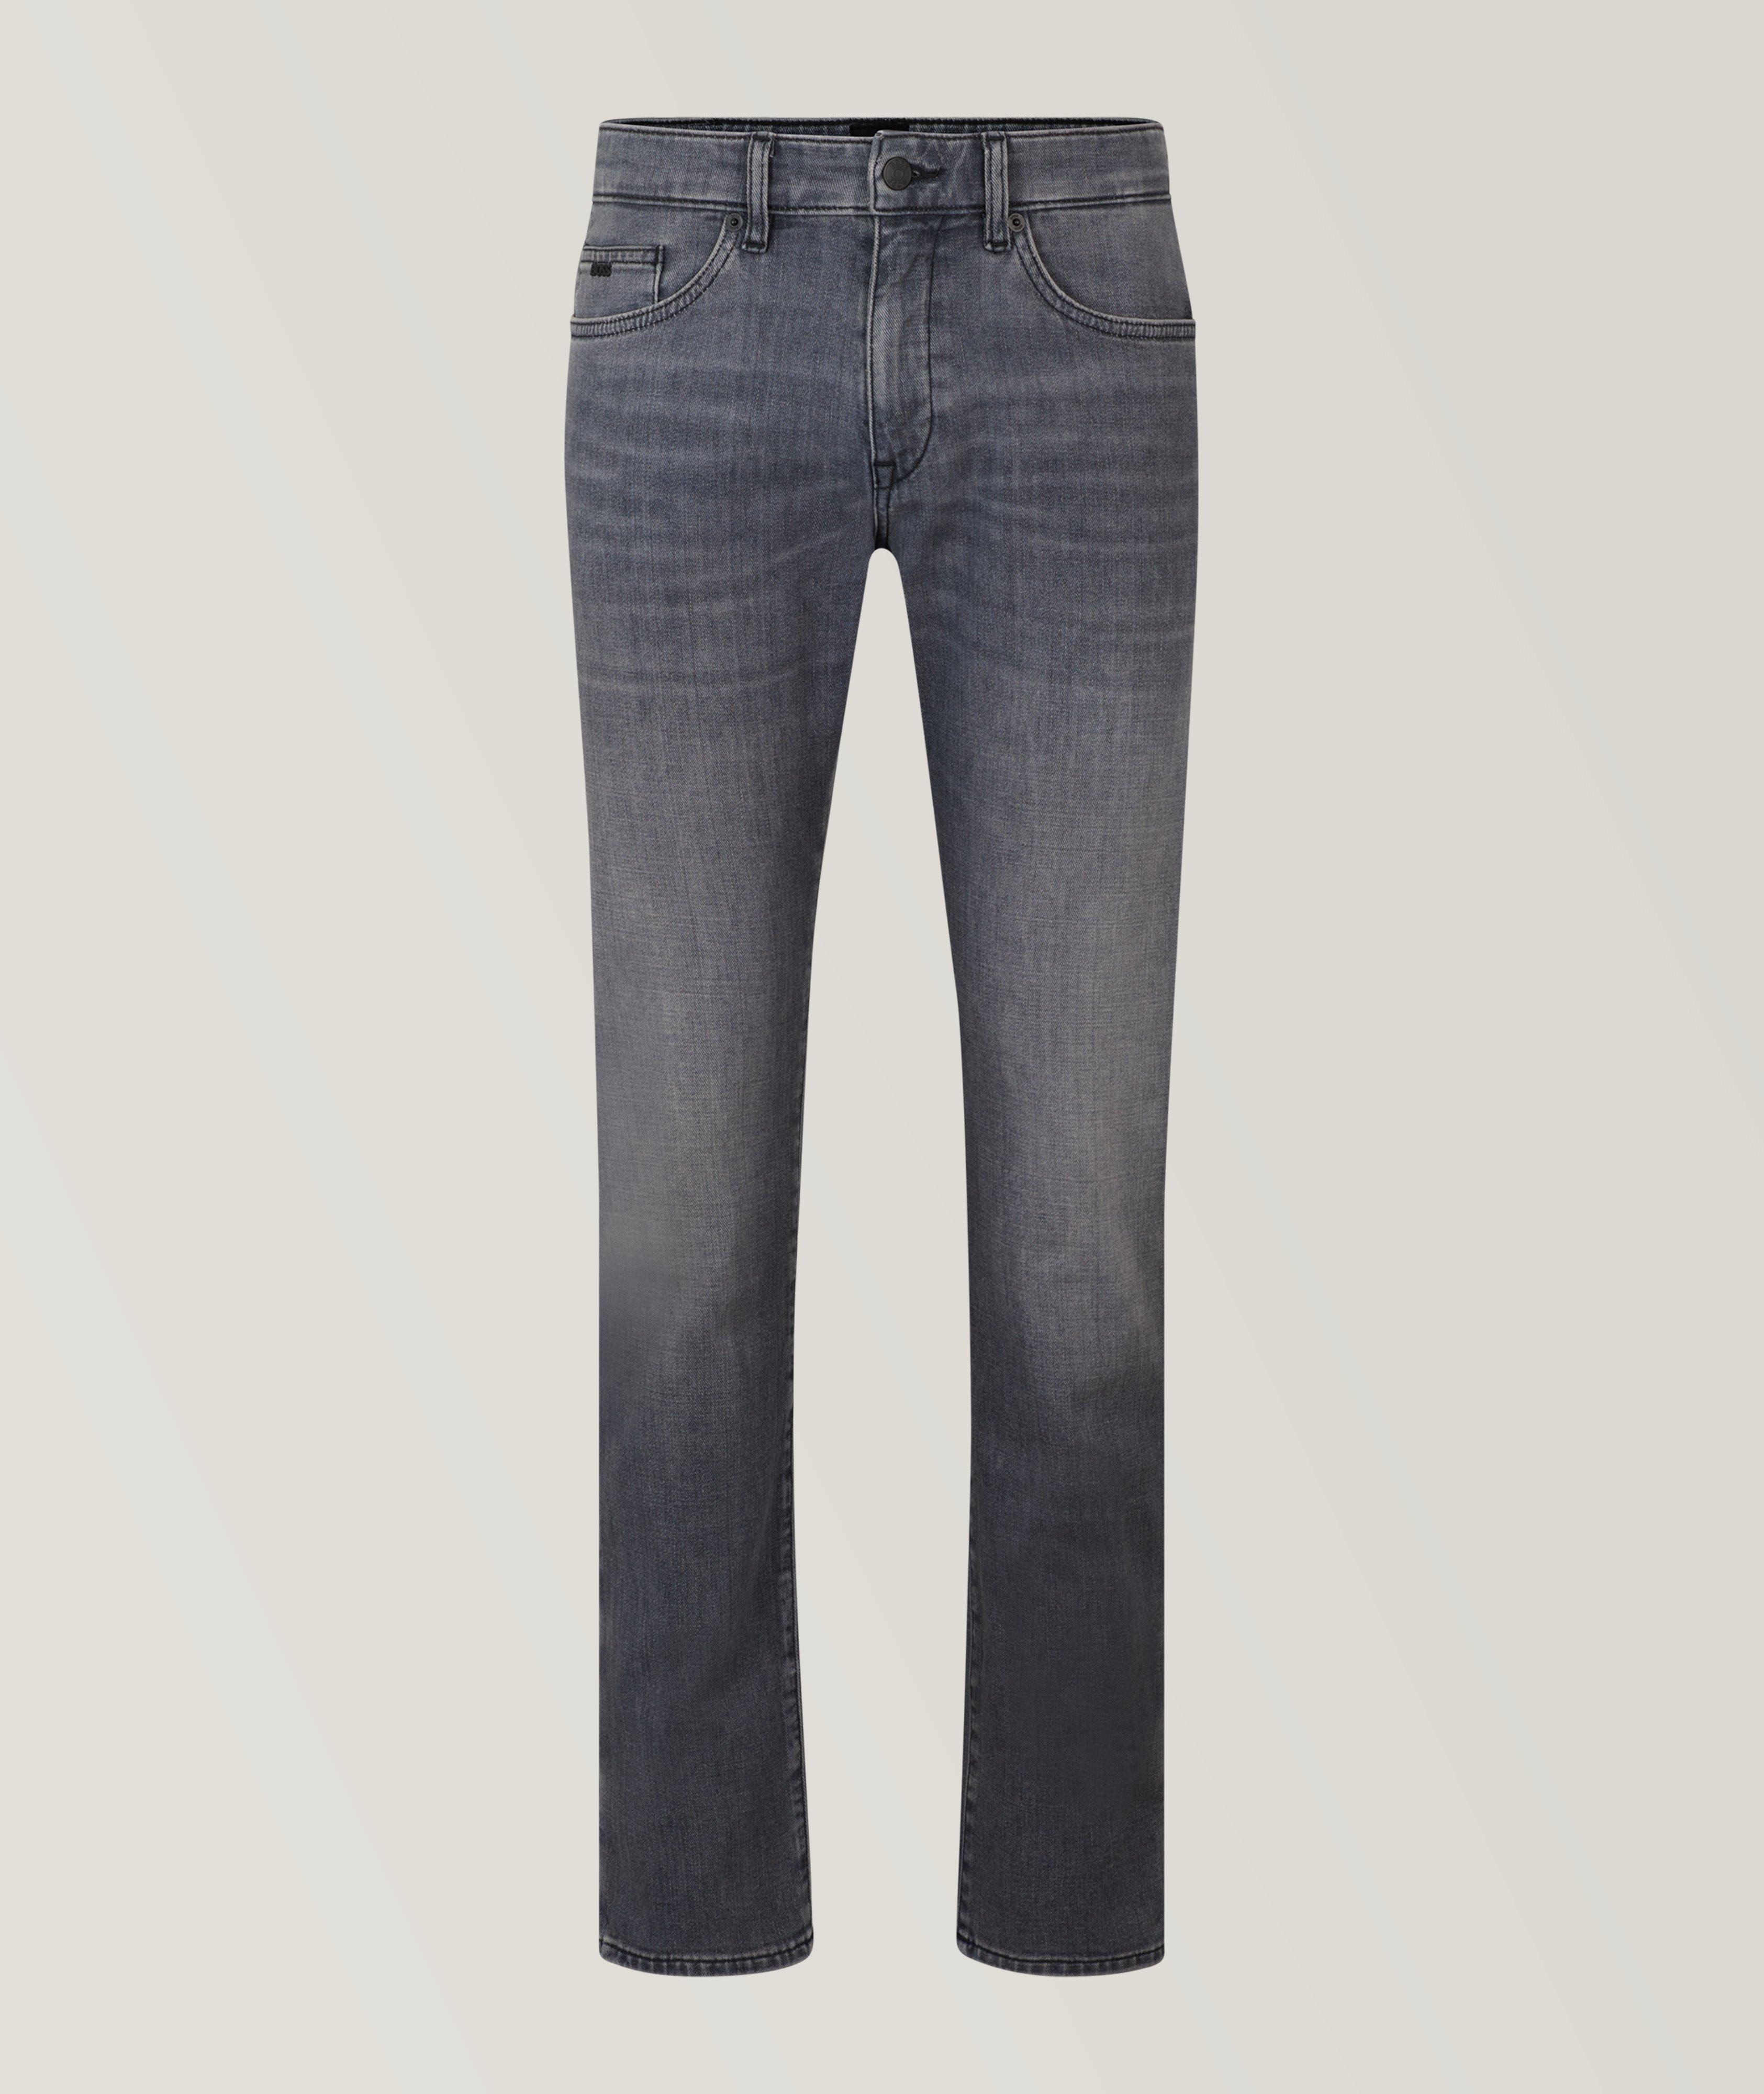 Slim-Fit Delaware Cotton-Blend Jeans image 0